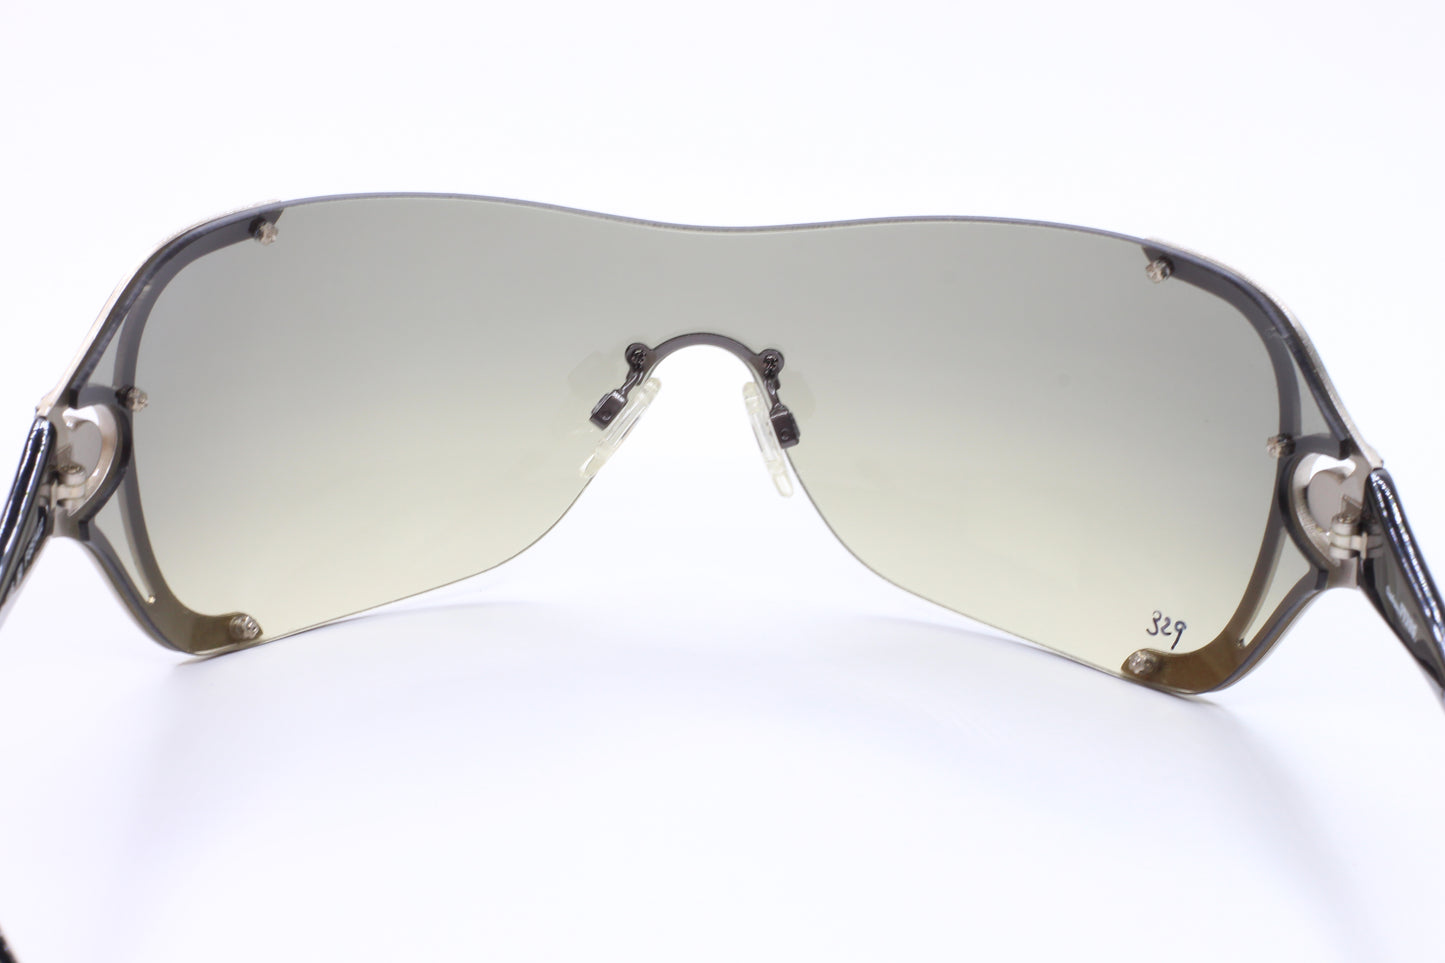 Gianfranco Ferre FG51402 Luxury Silver Black Wrap Designer Sunglasses - sunglasses, Women